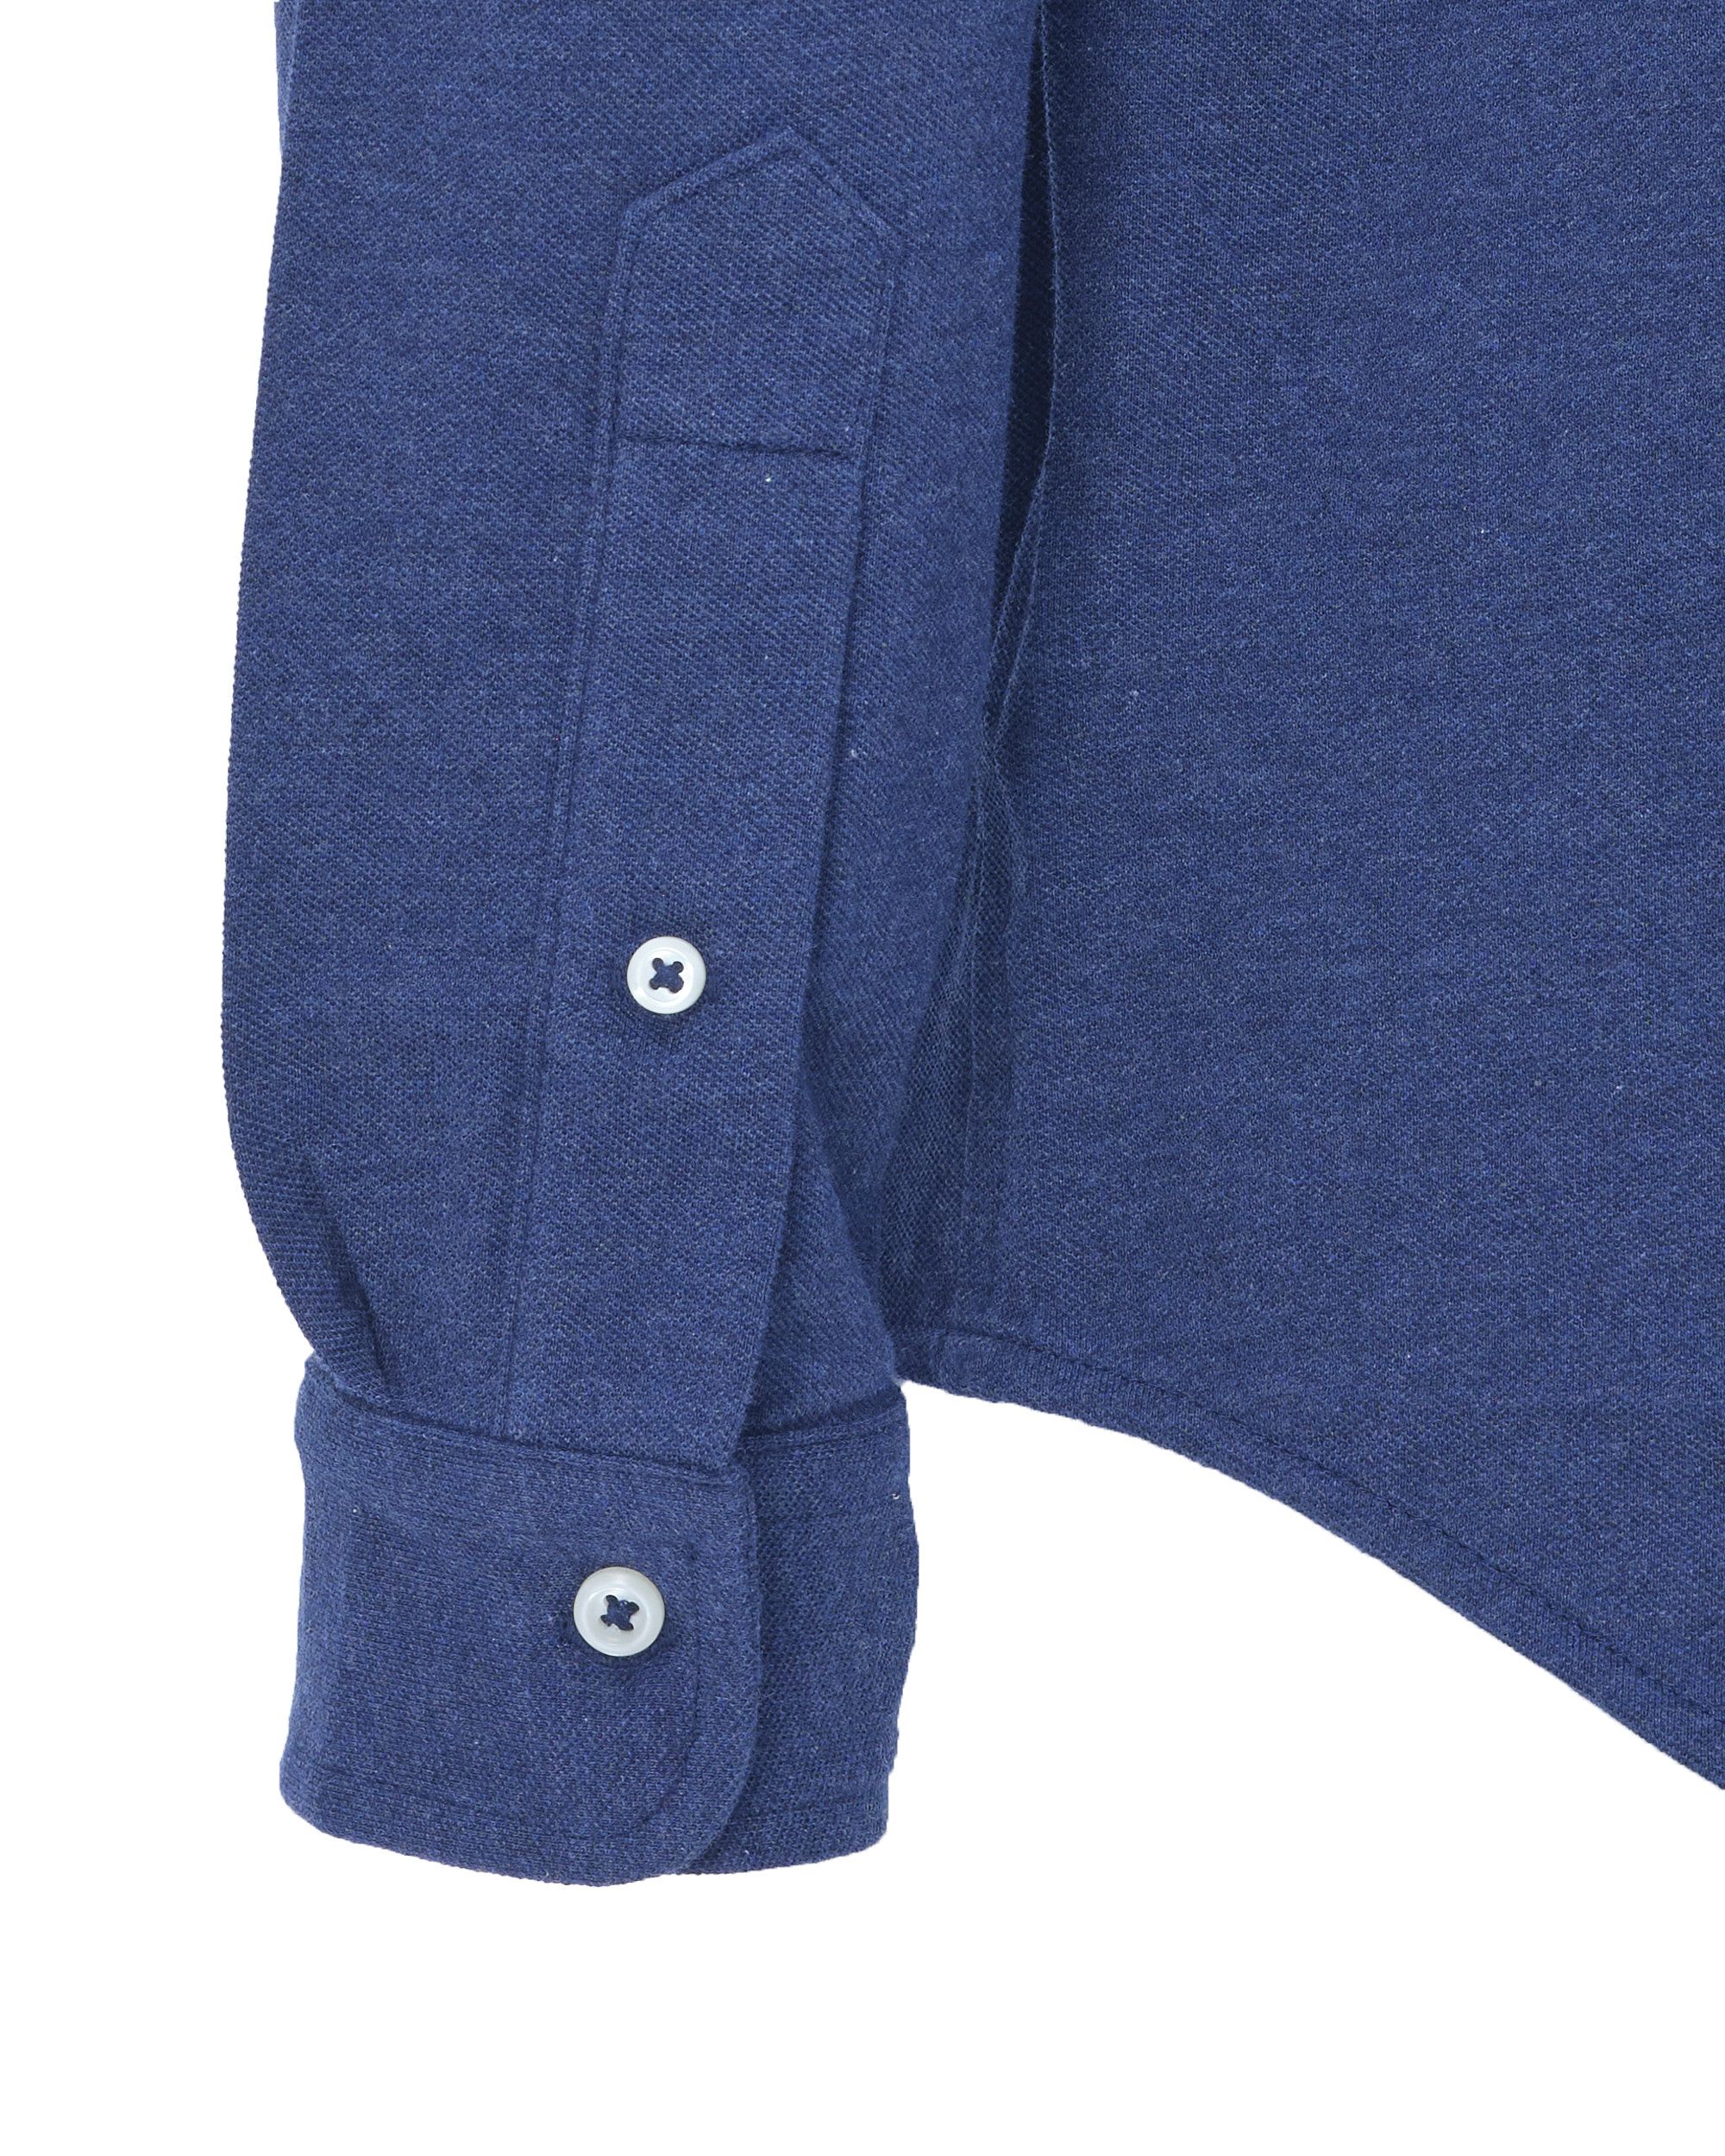 Polo Ralph Lauren Casual Overhemd LM Donker blauw 080584-001-L